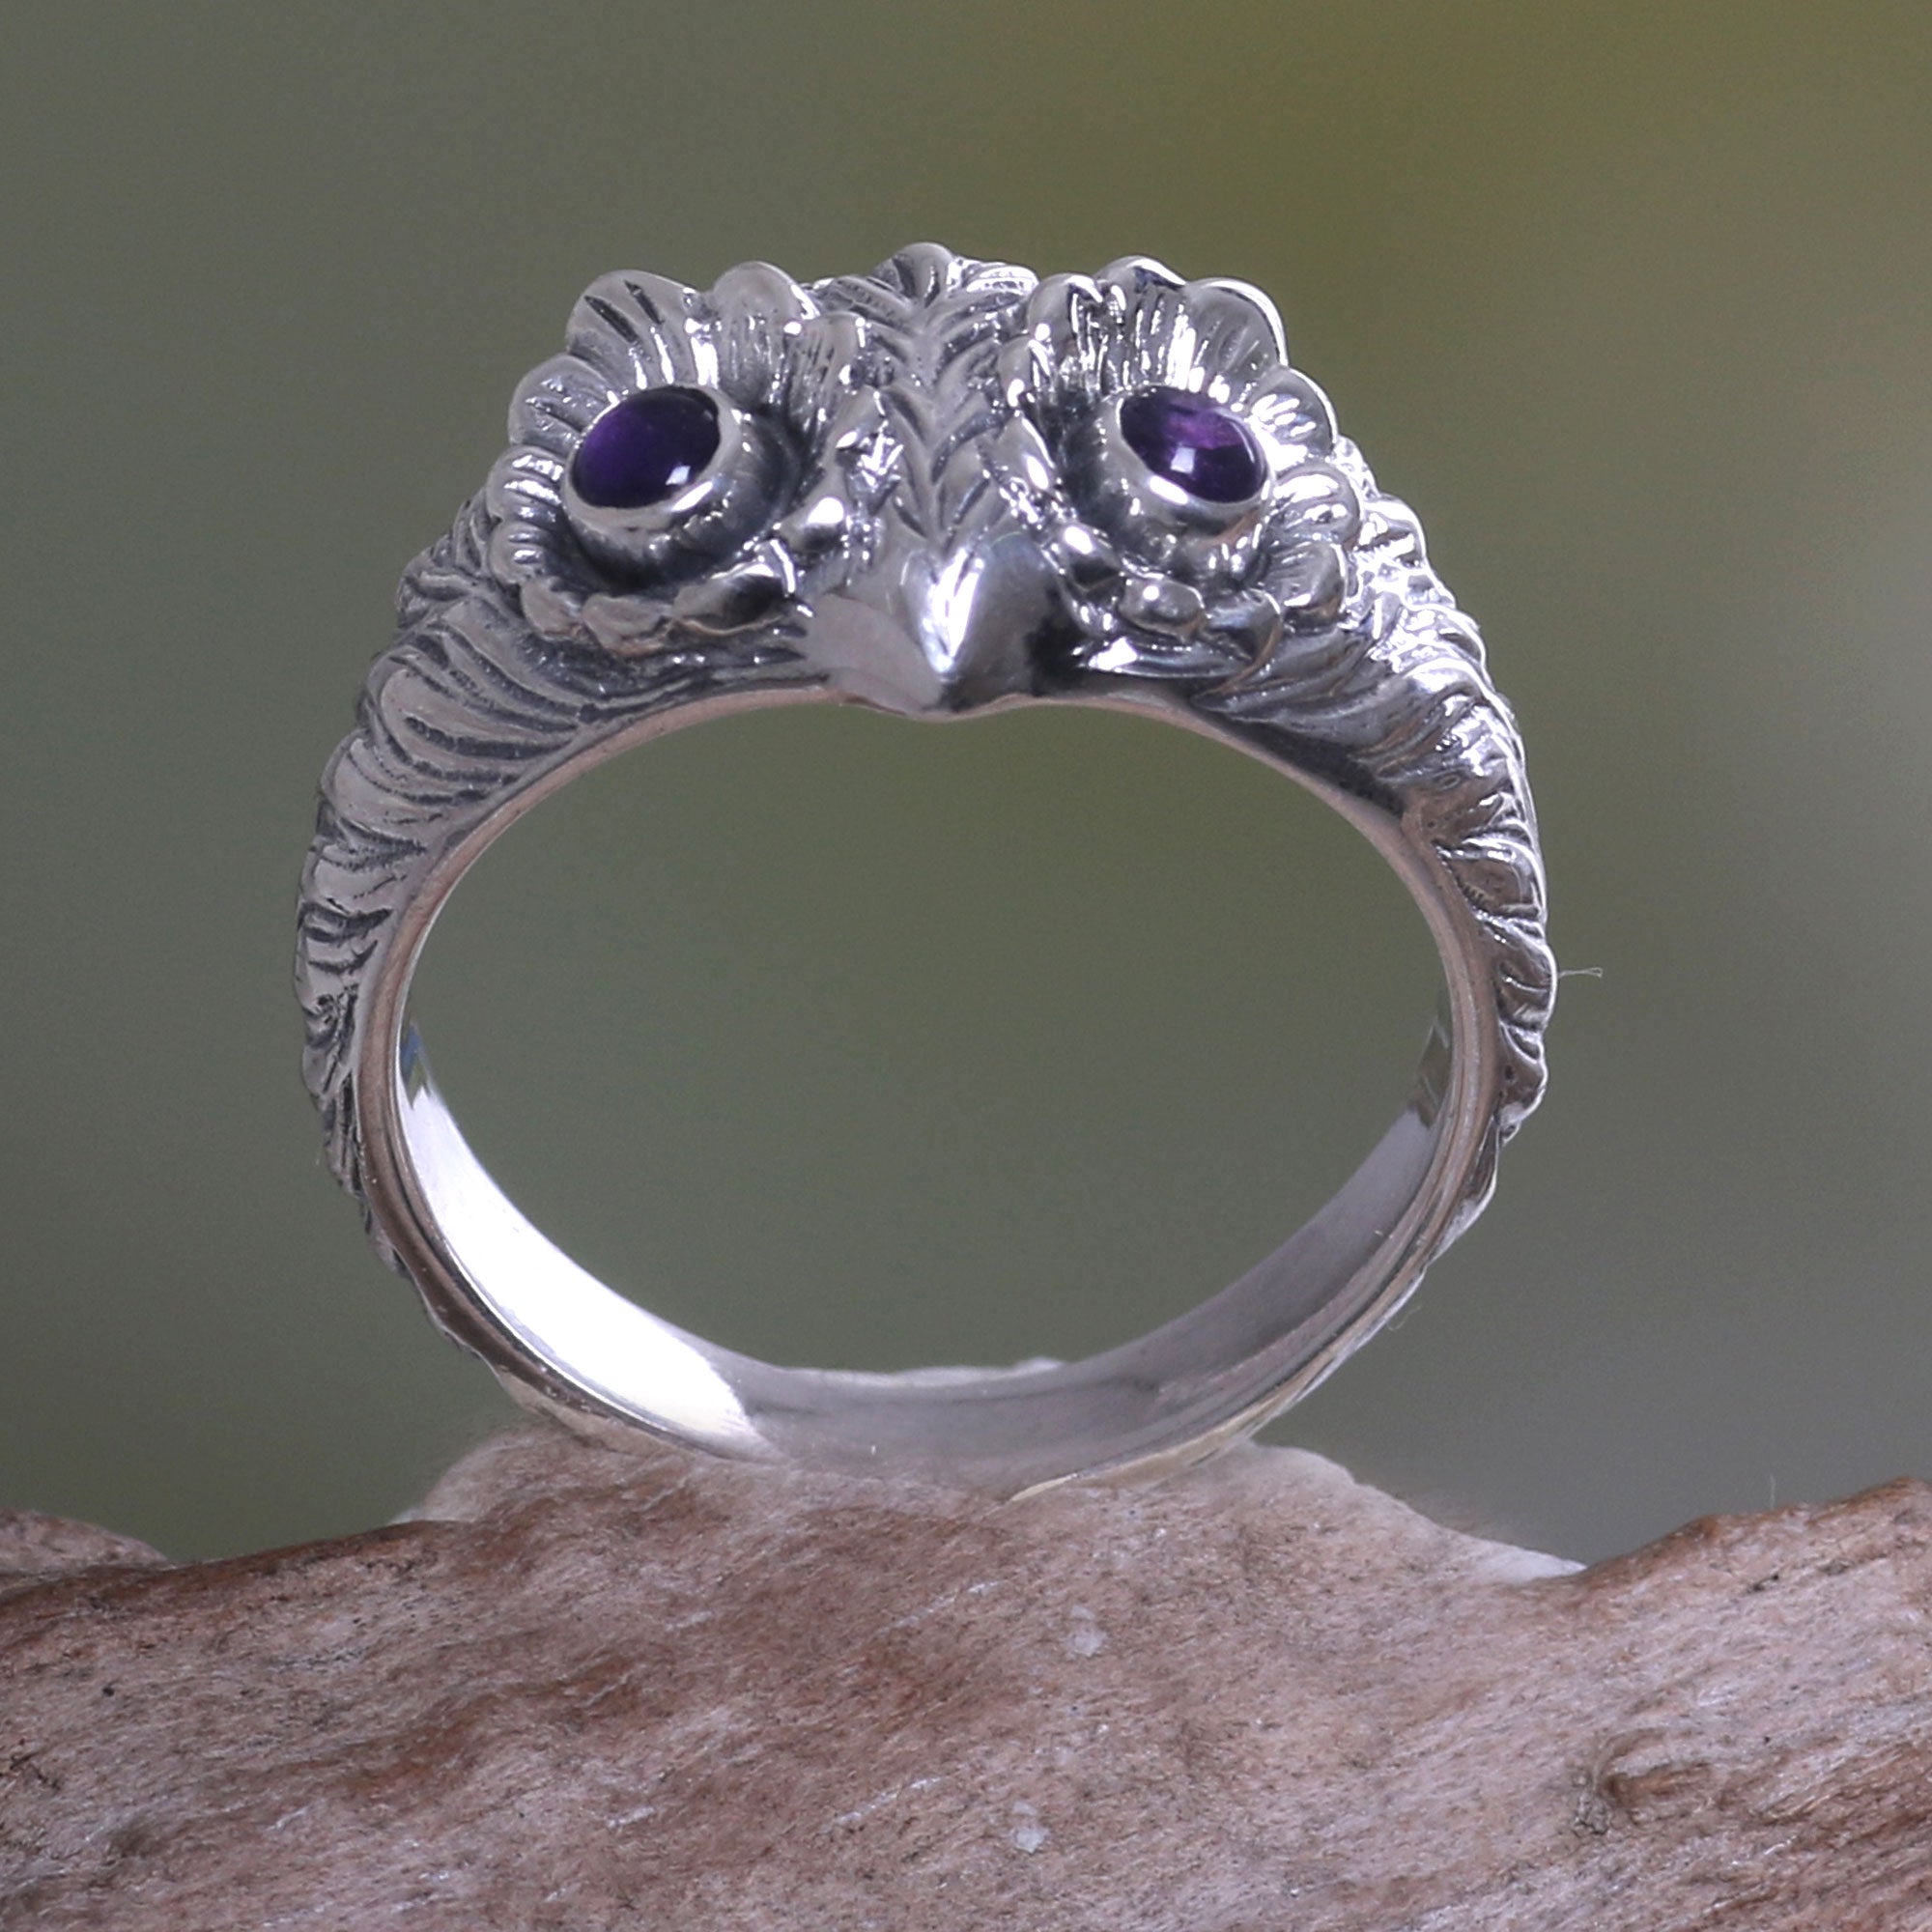 NOVICA Owl Wisdom Amethyst & Silver Band Ring - Size 7